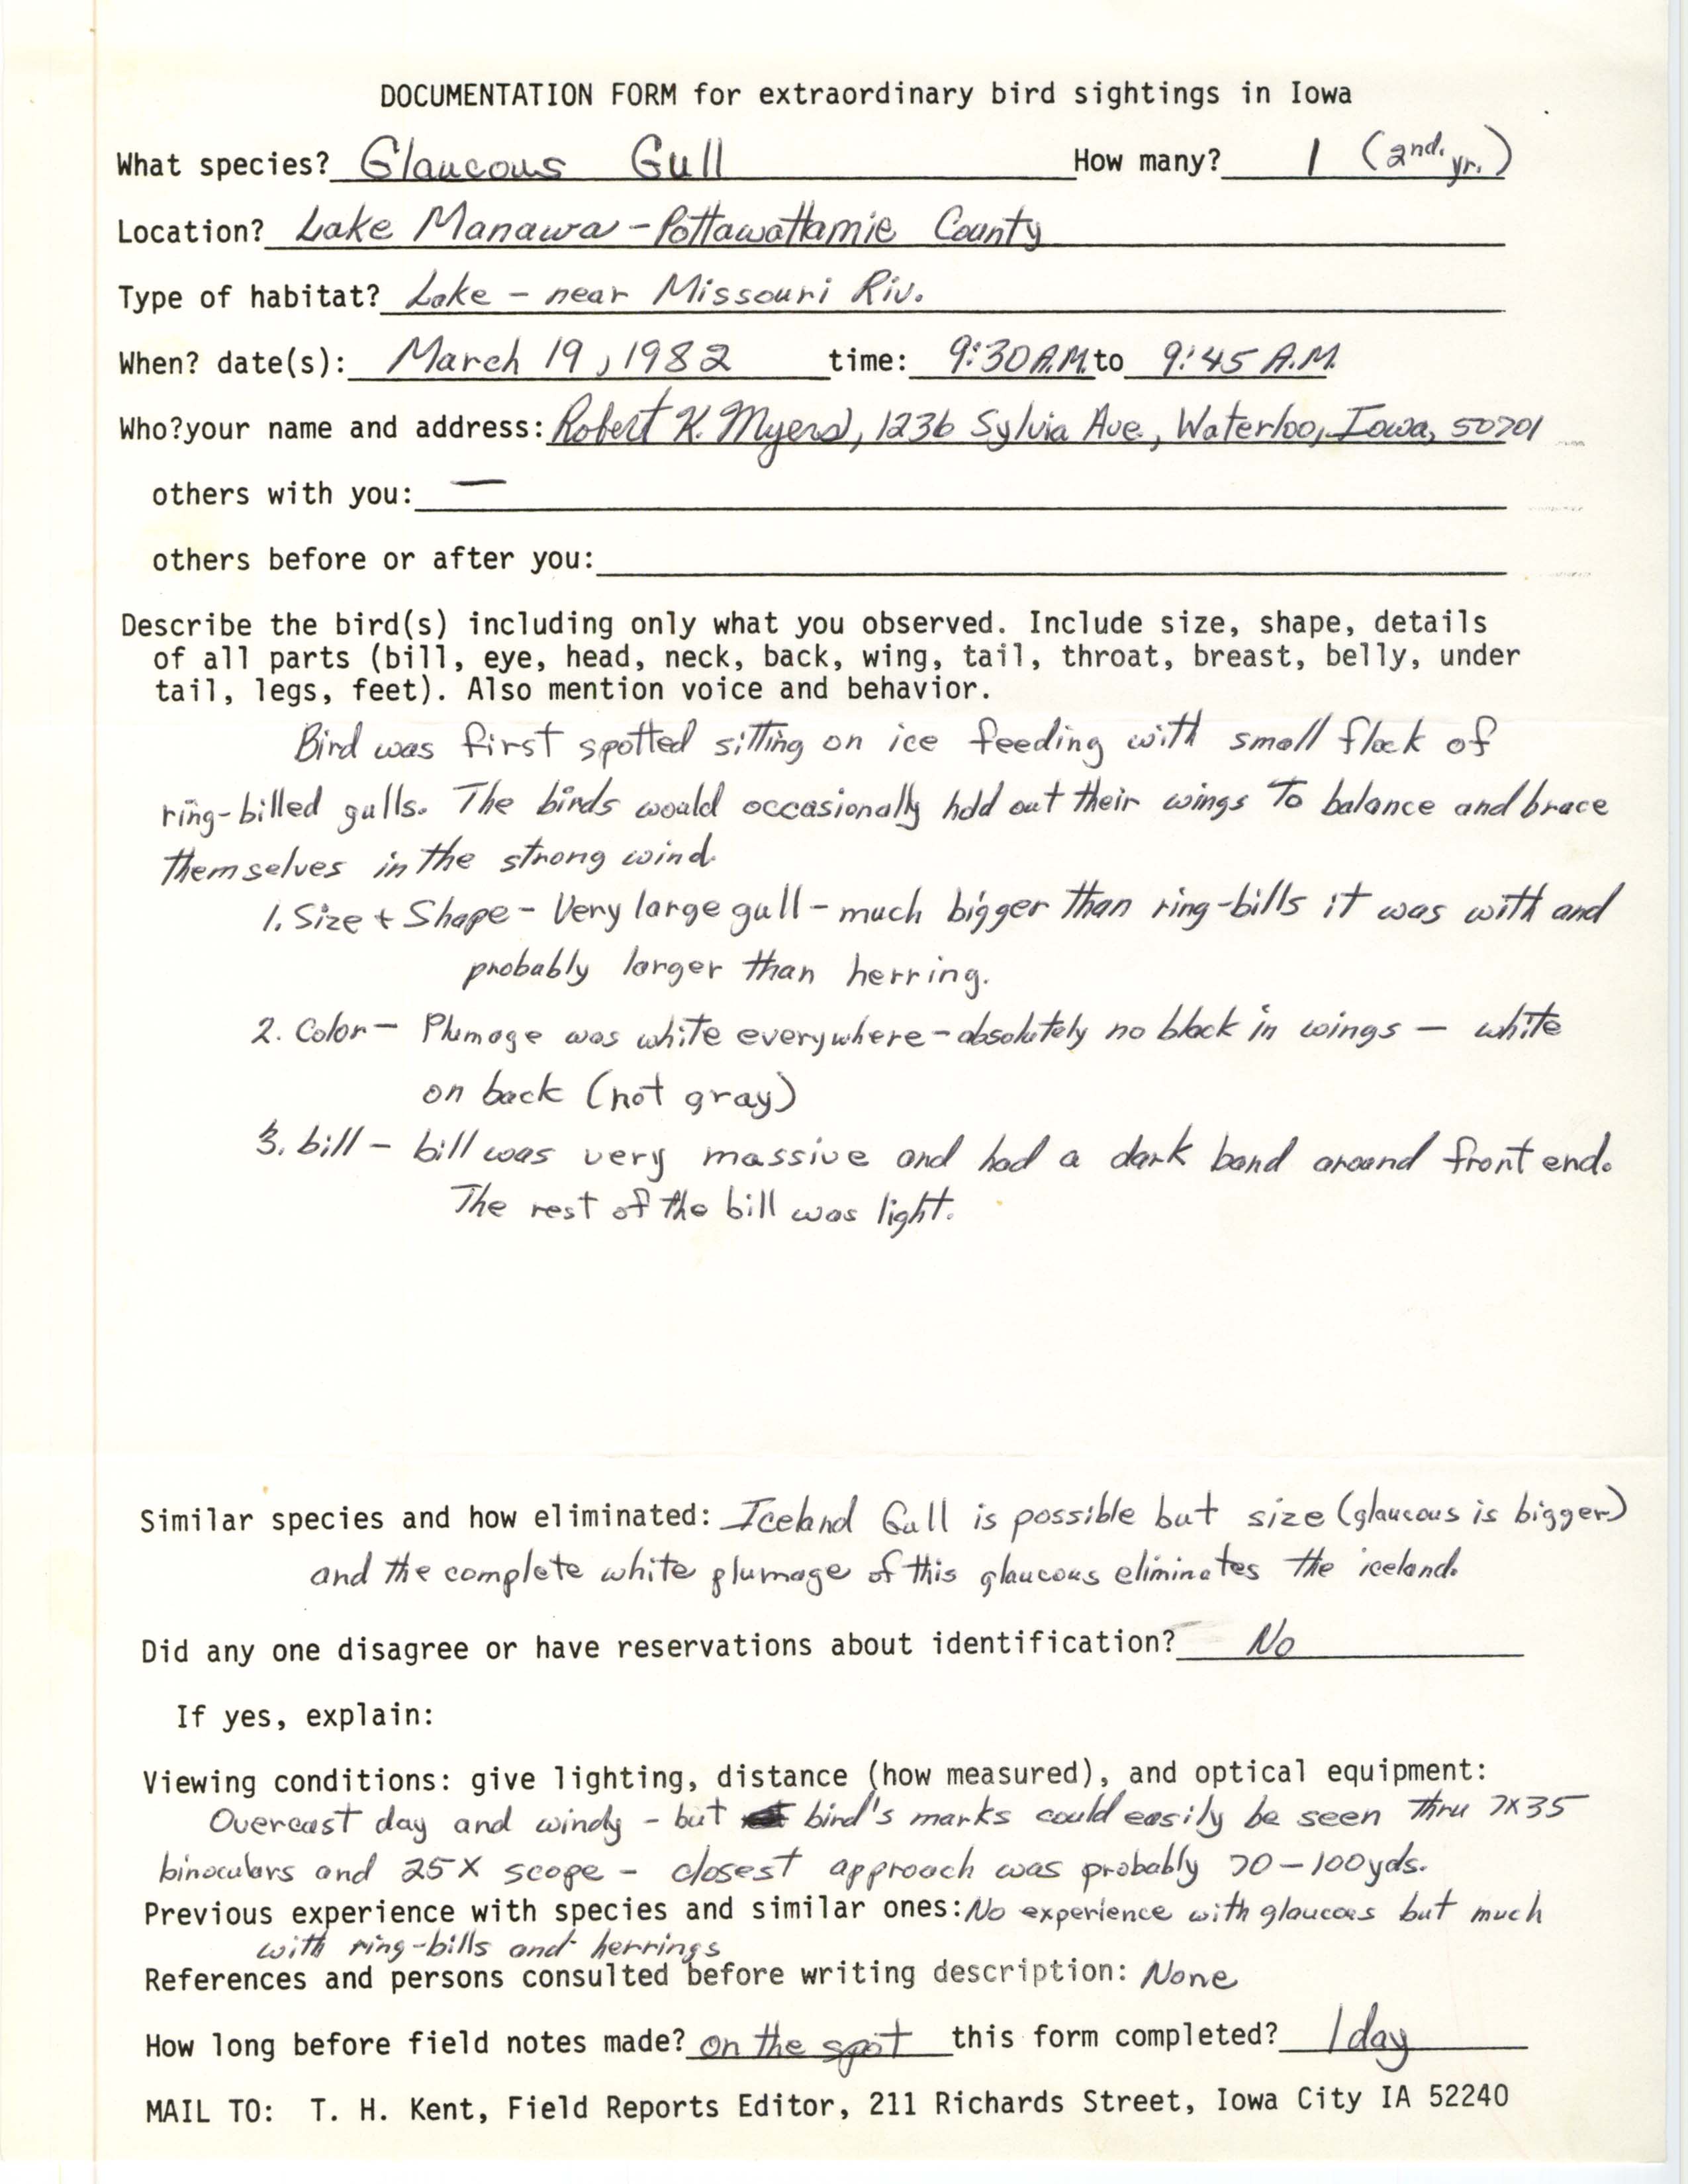 Rare bird documentation form for Glaucous Gull at Lake Manawa, 1982